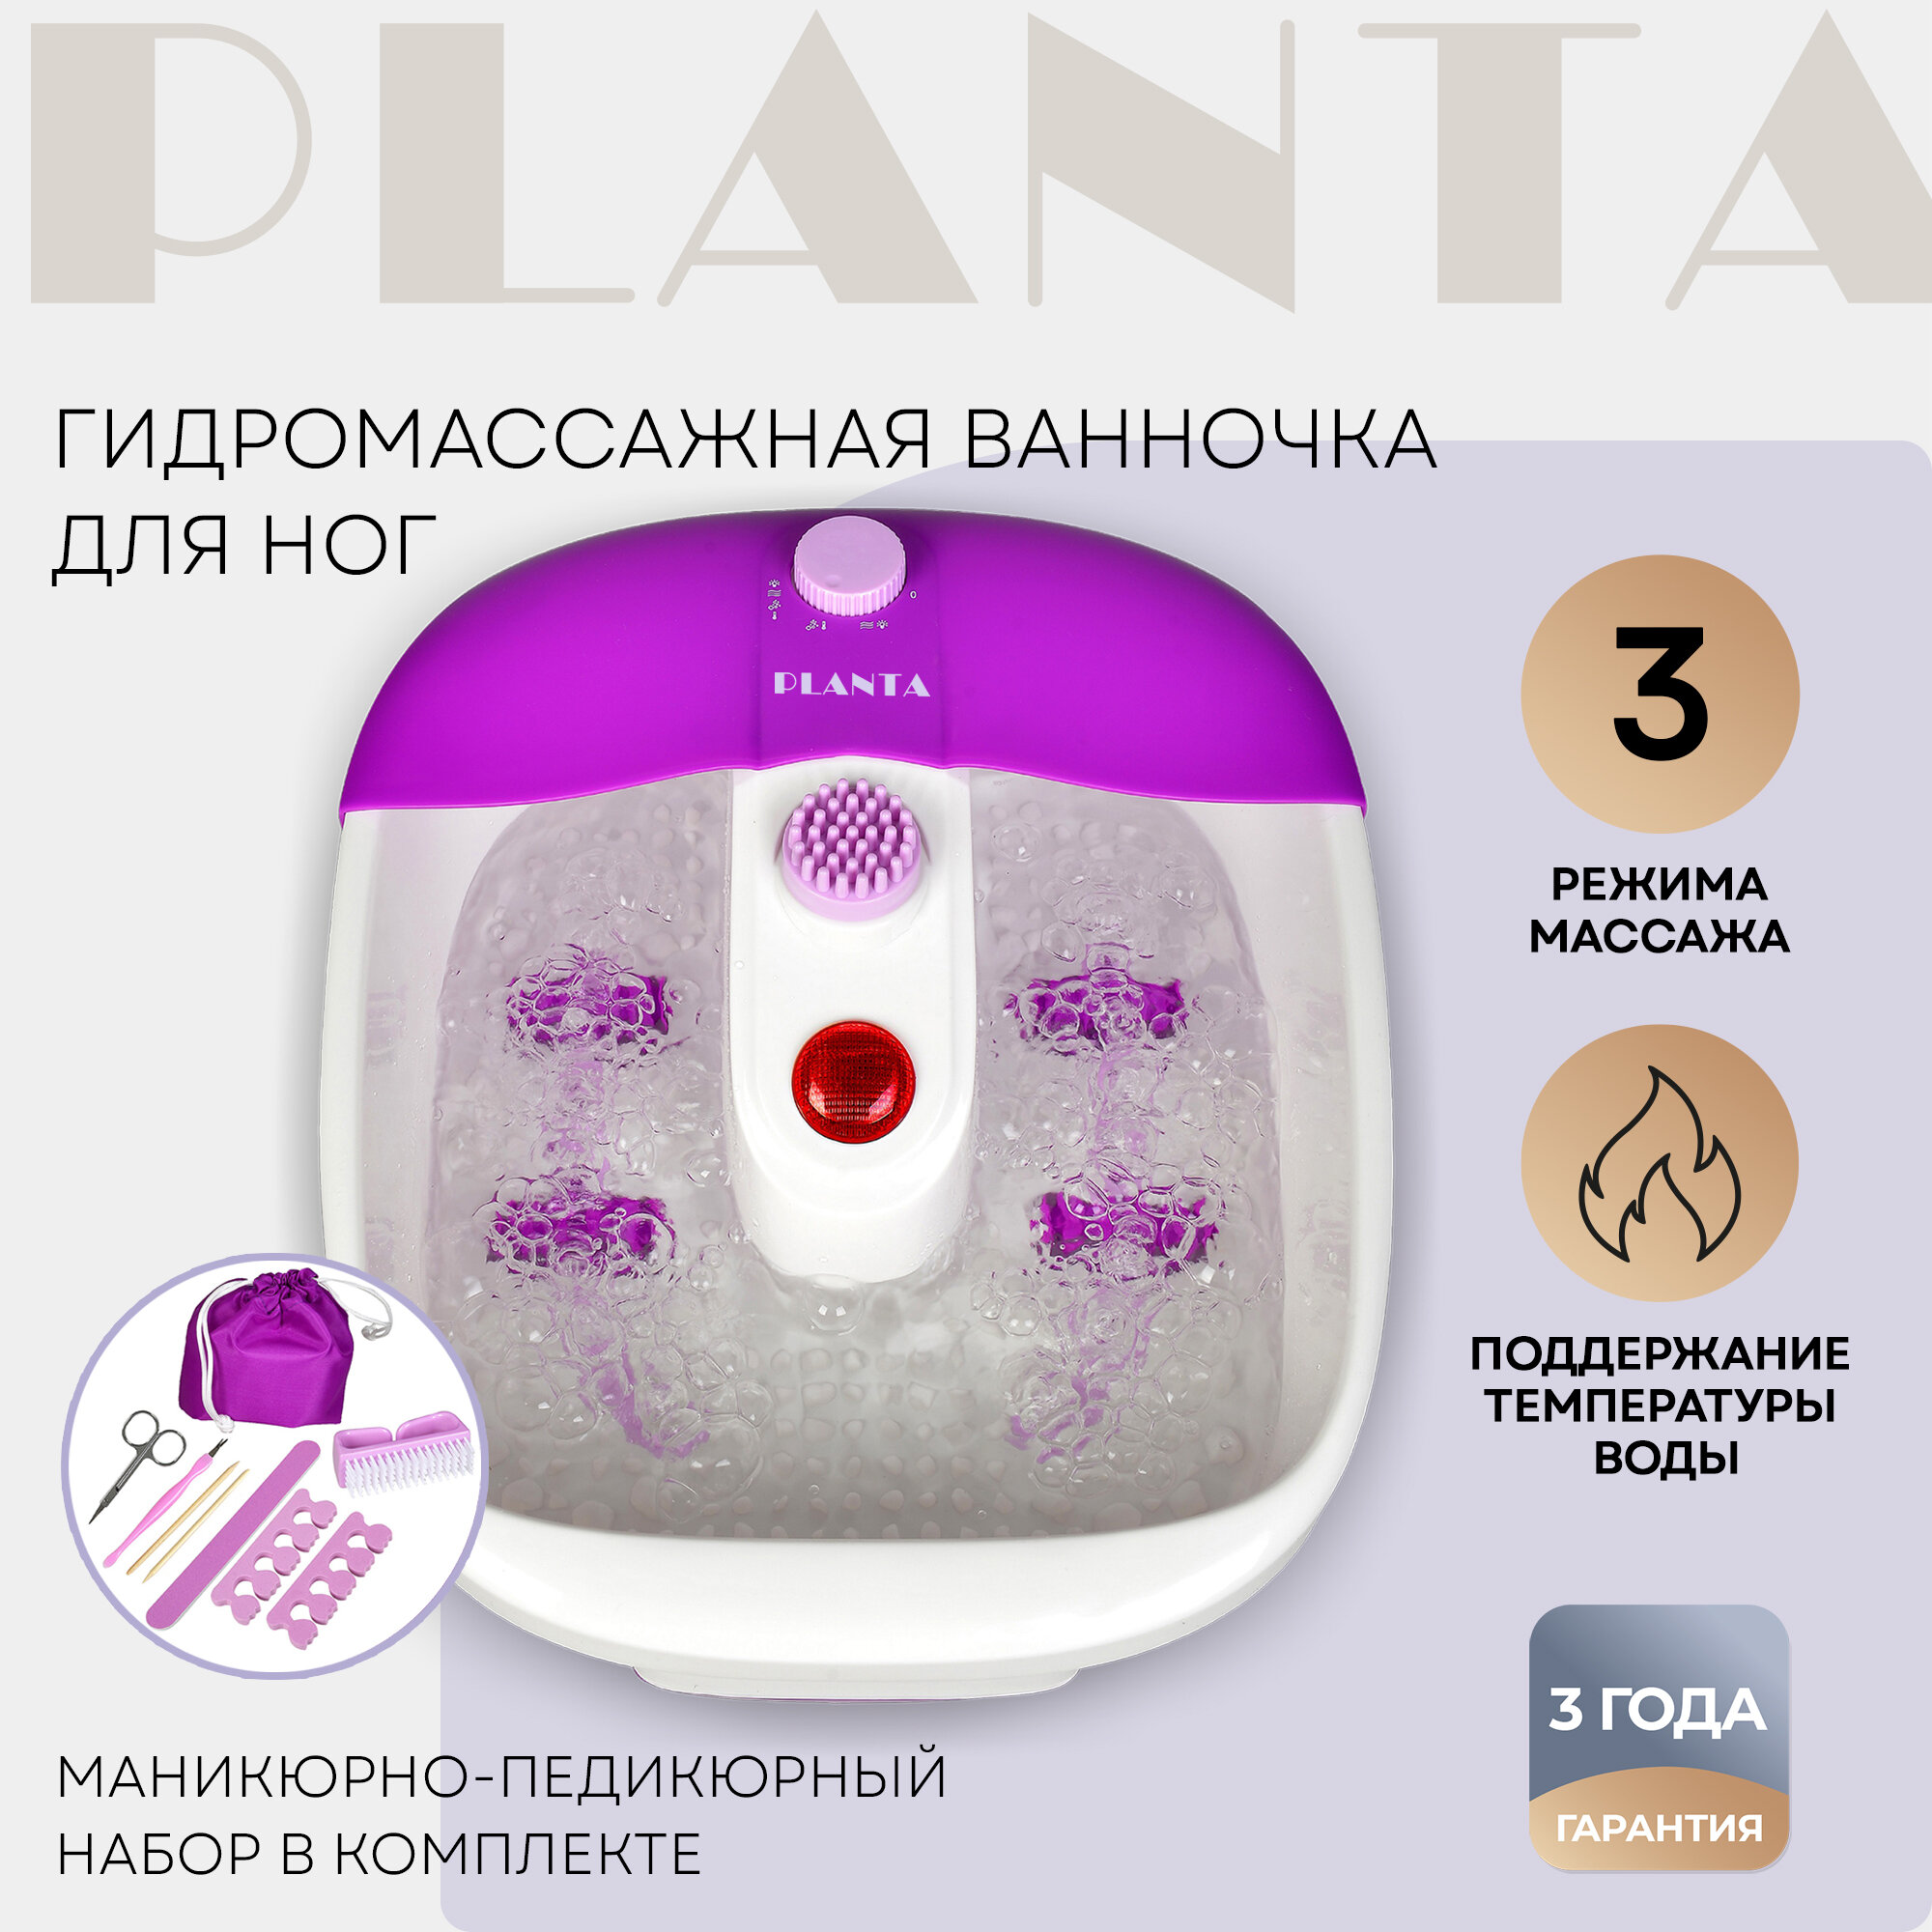 Гидромассажная ванночка Planta Spa Salon MFS-200V